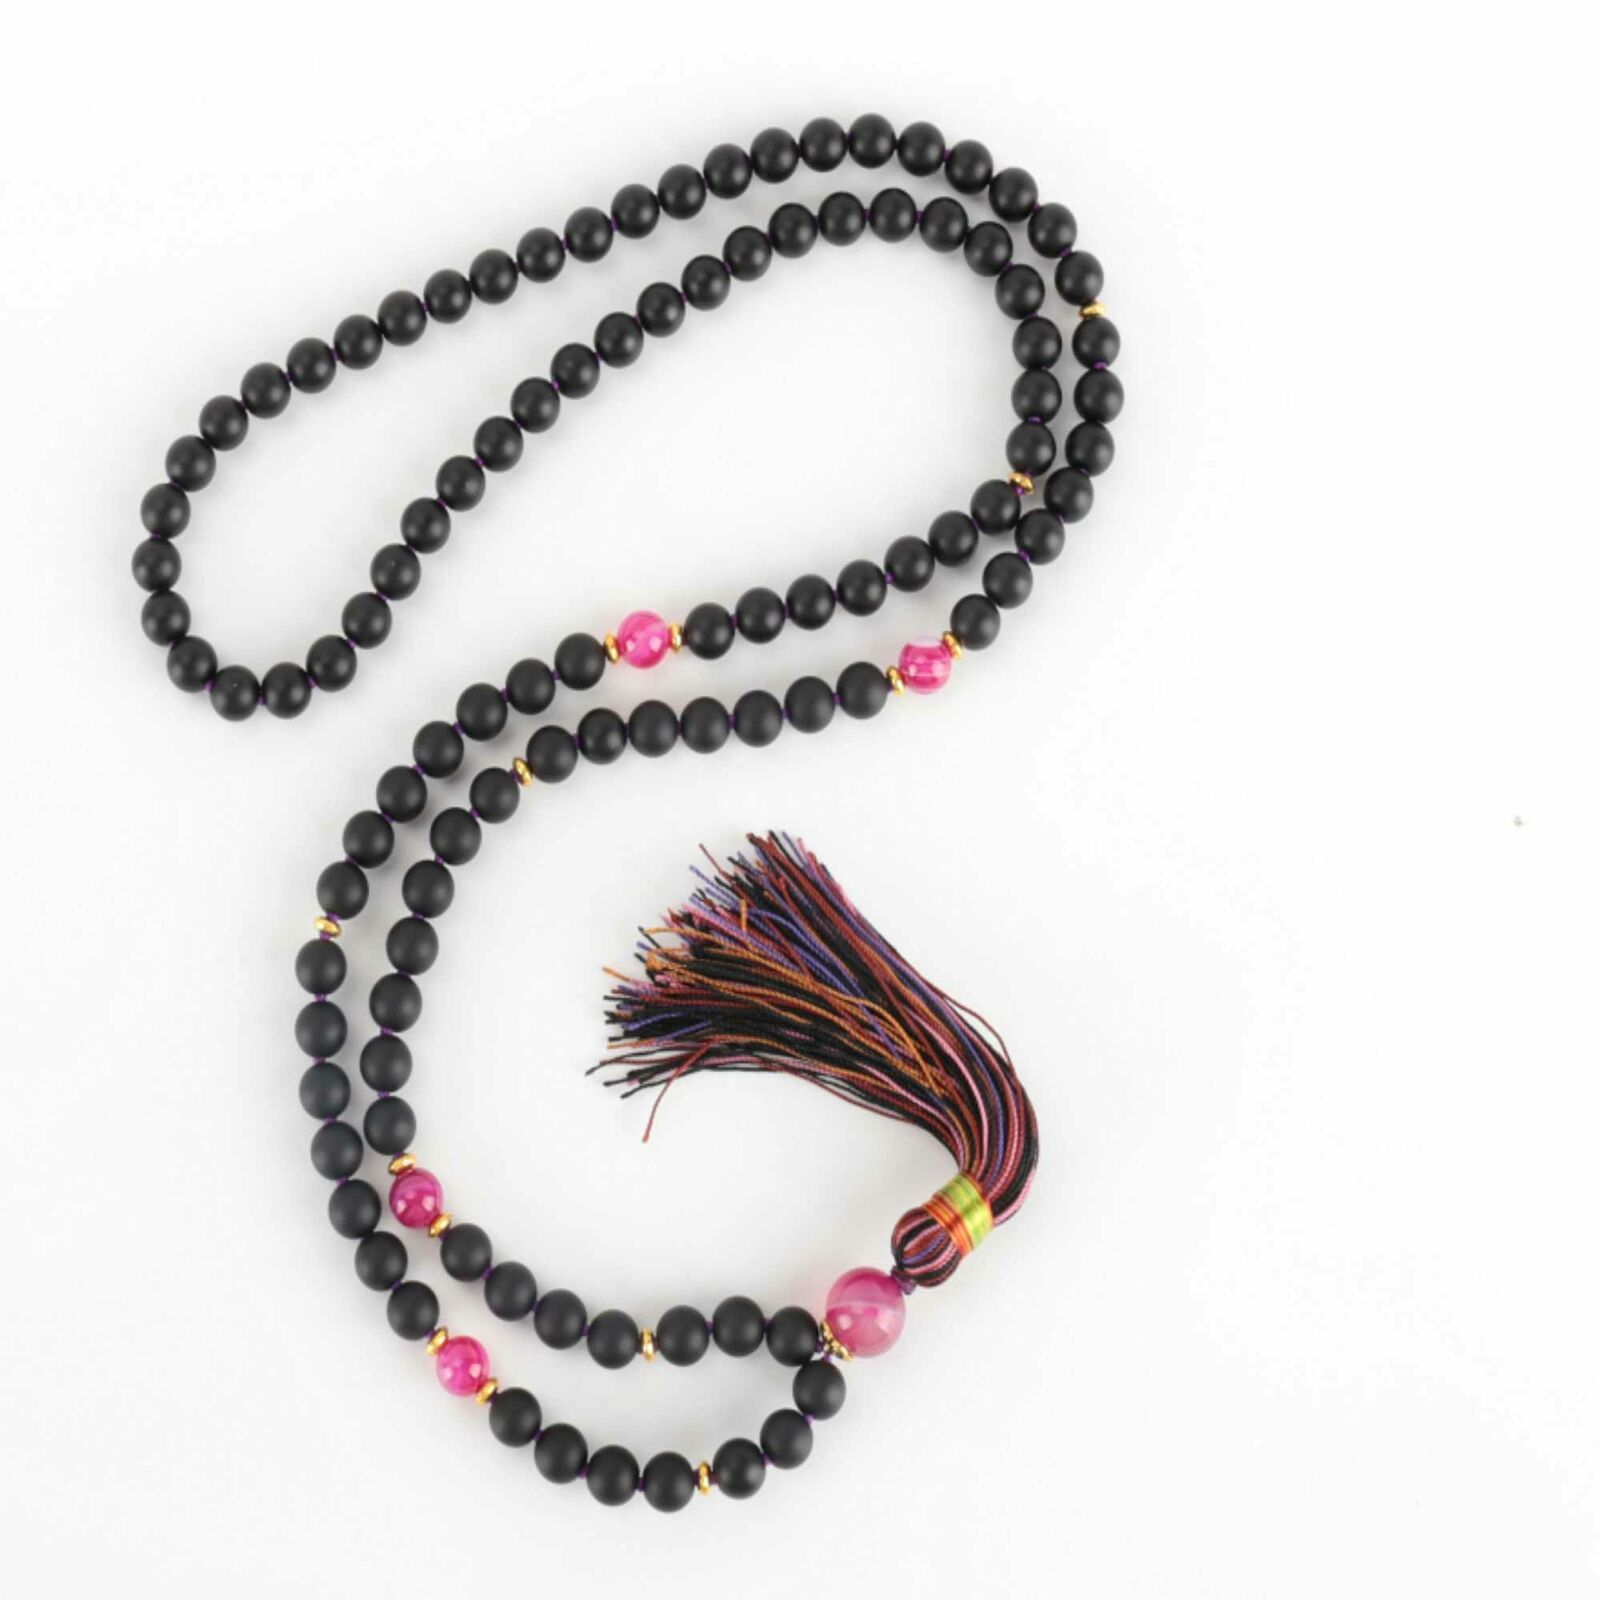 6mm 108 knot Natural black agate gemstone beads bracelet gift Dark Matter